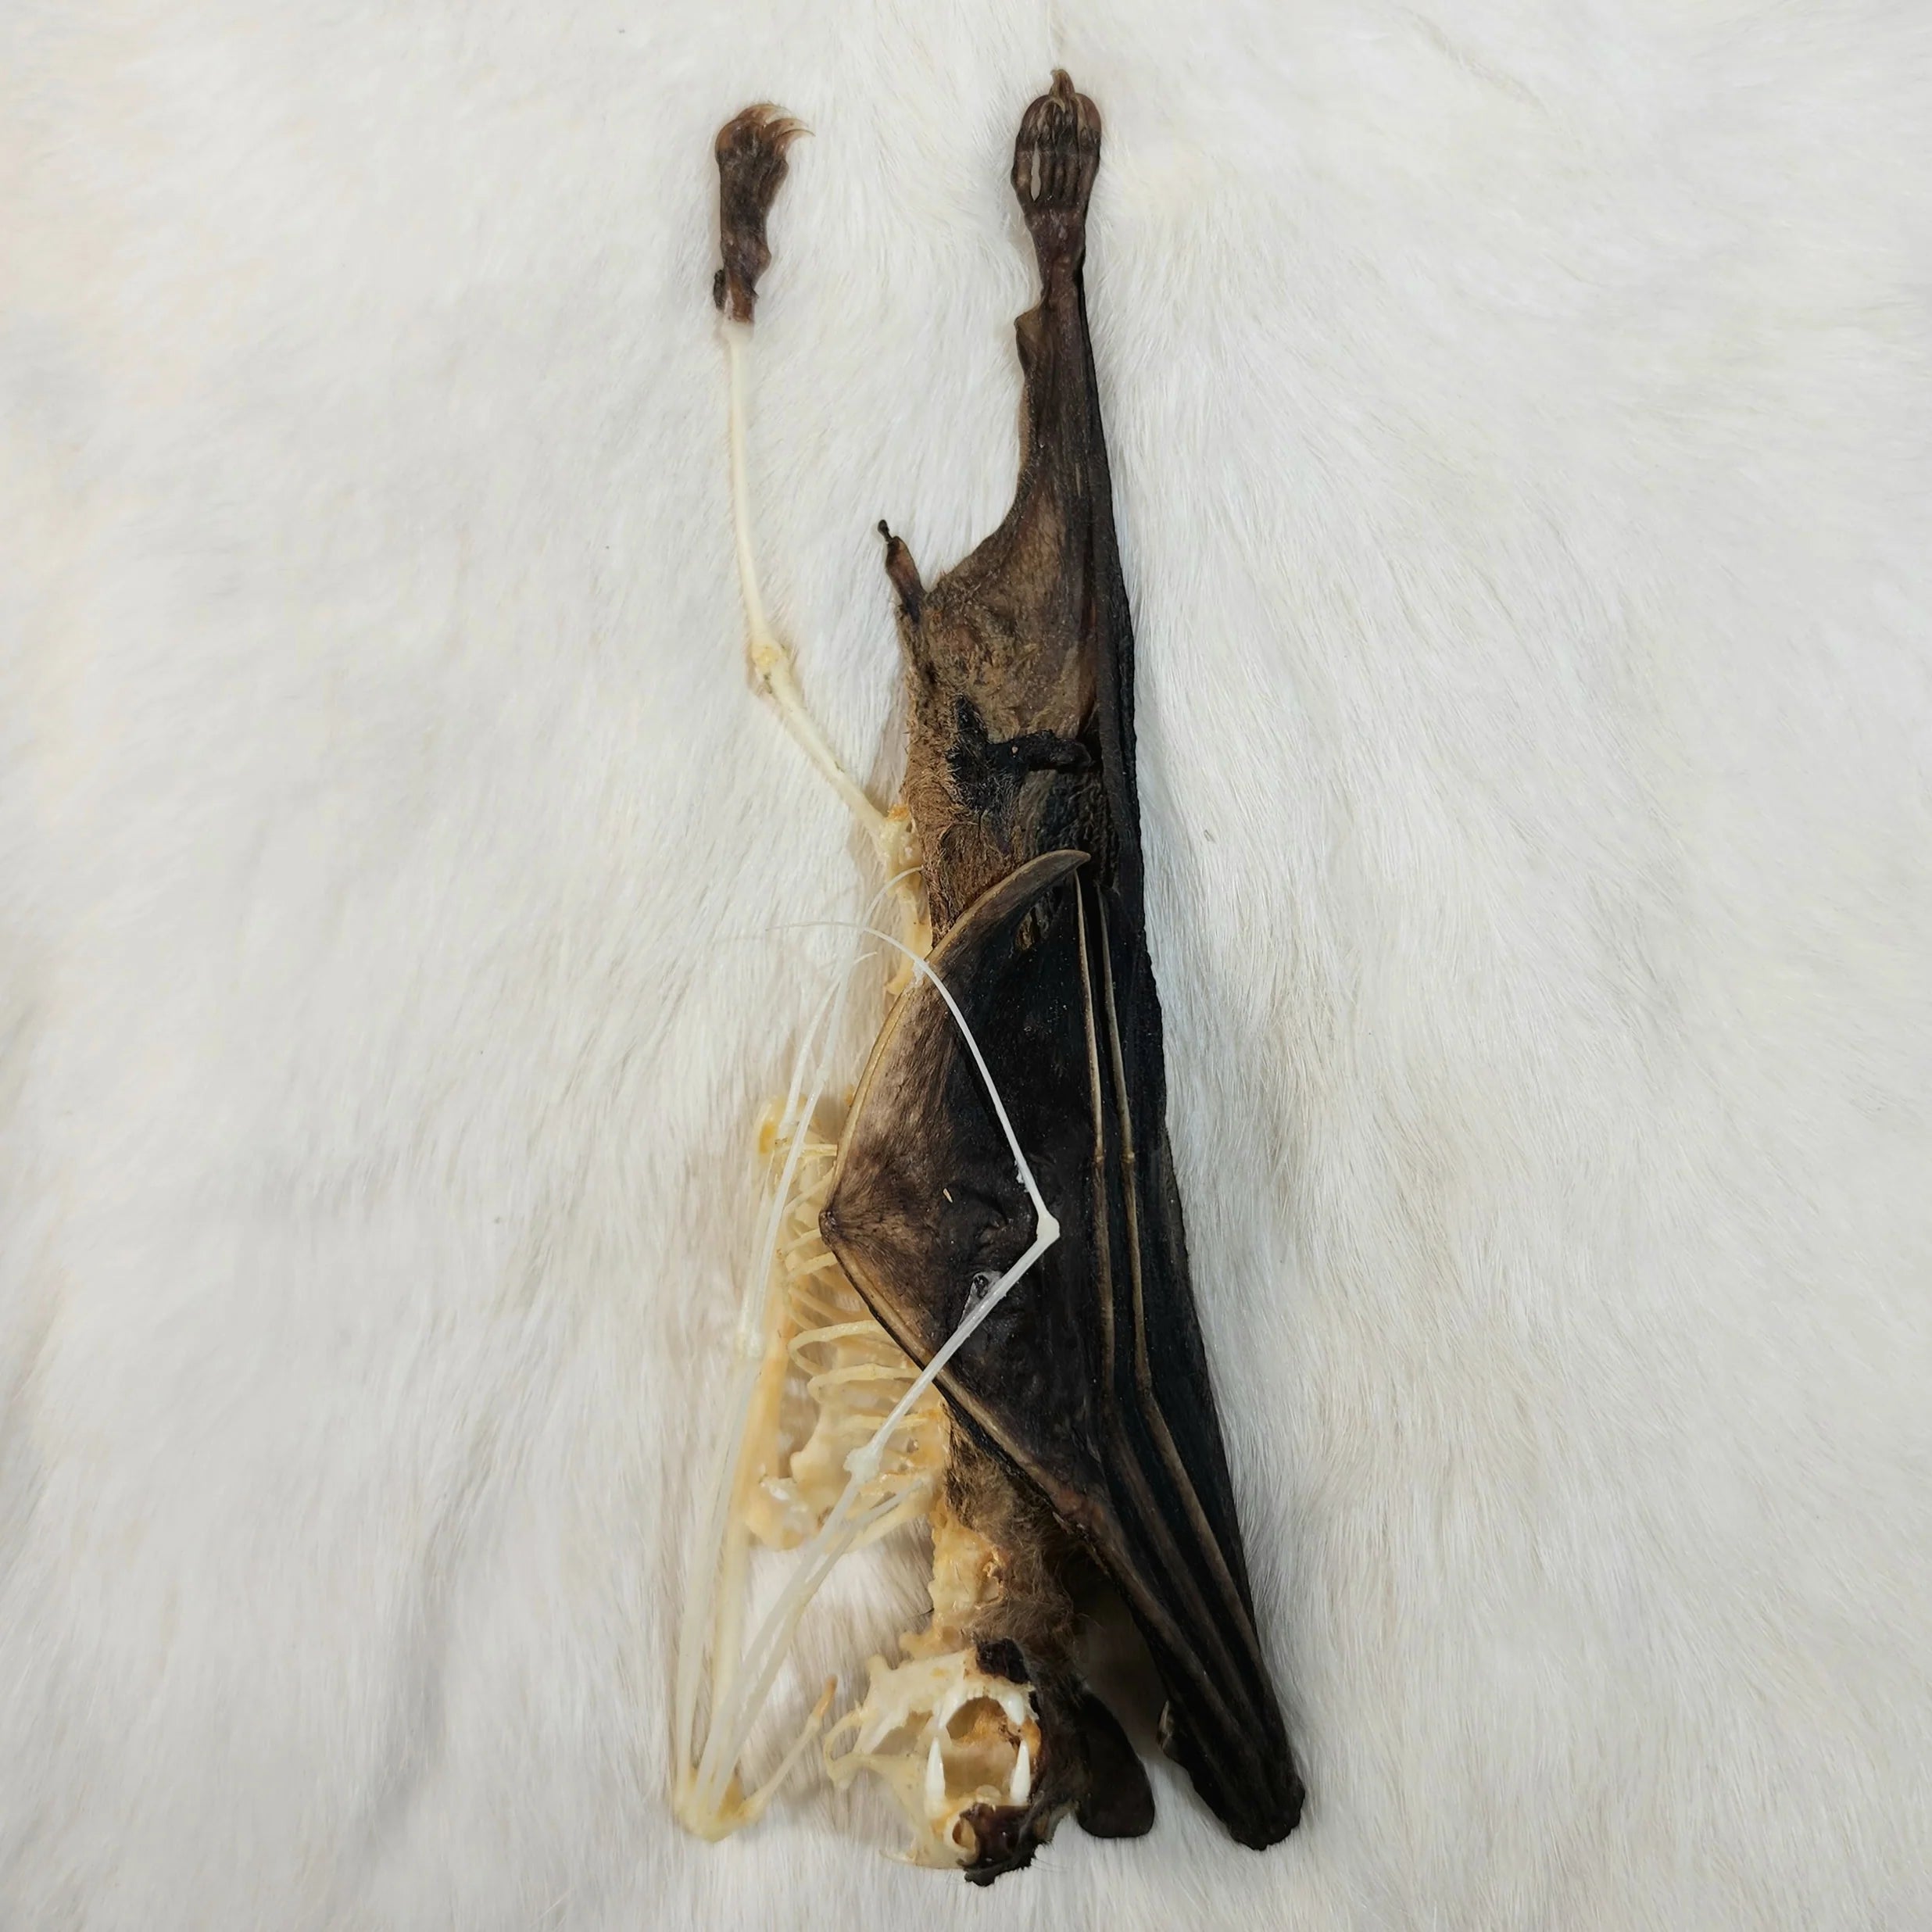 Cave Nectar Bat - Comparative Anatomy